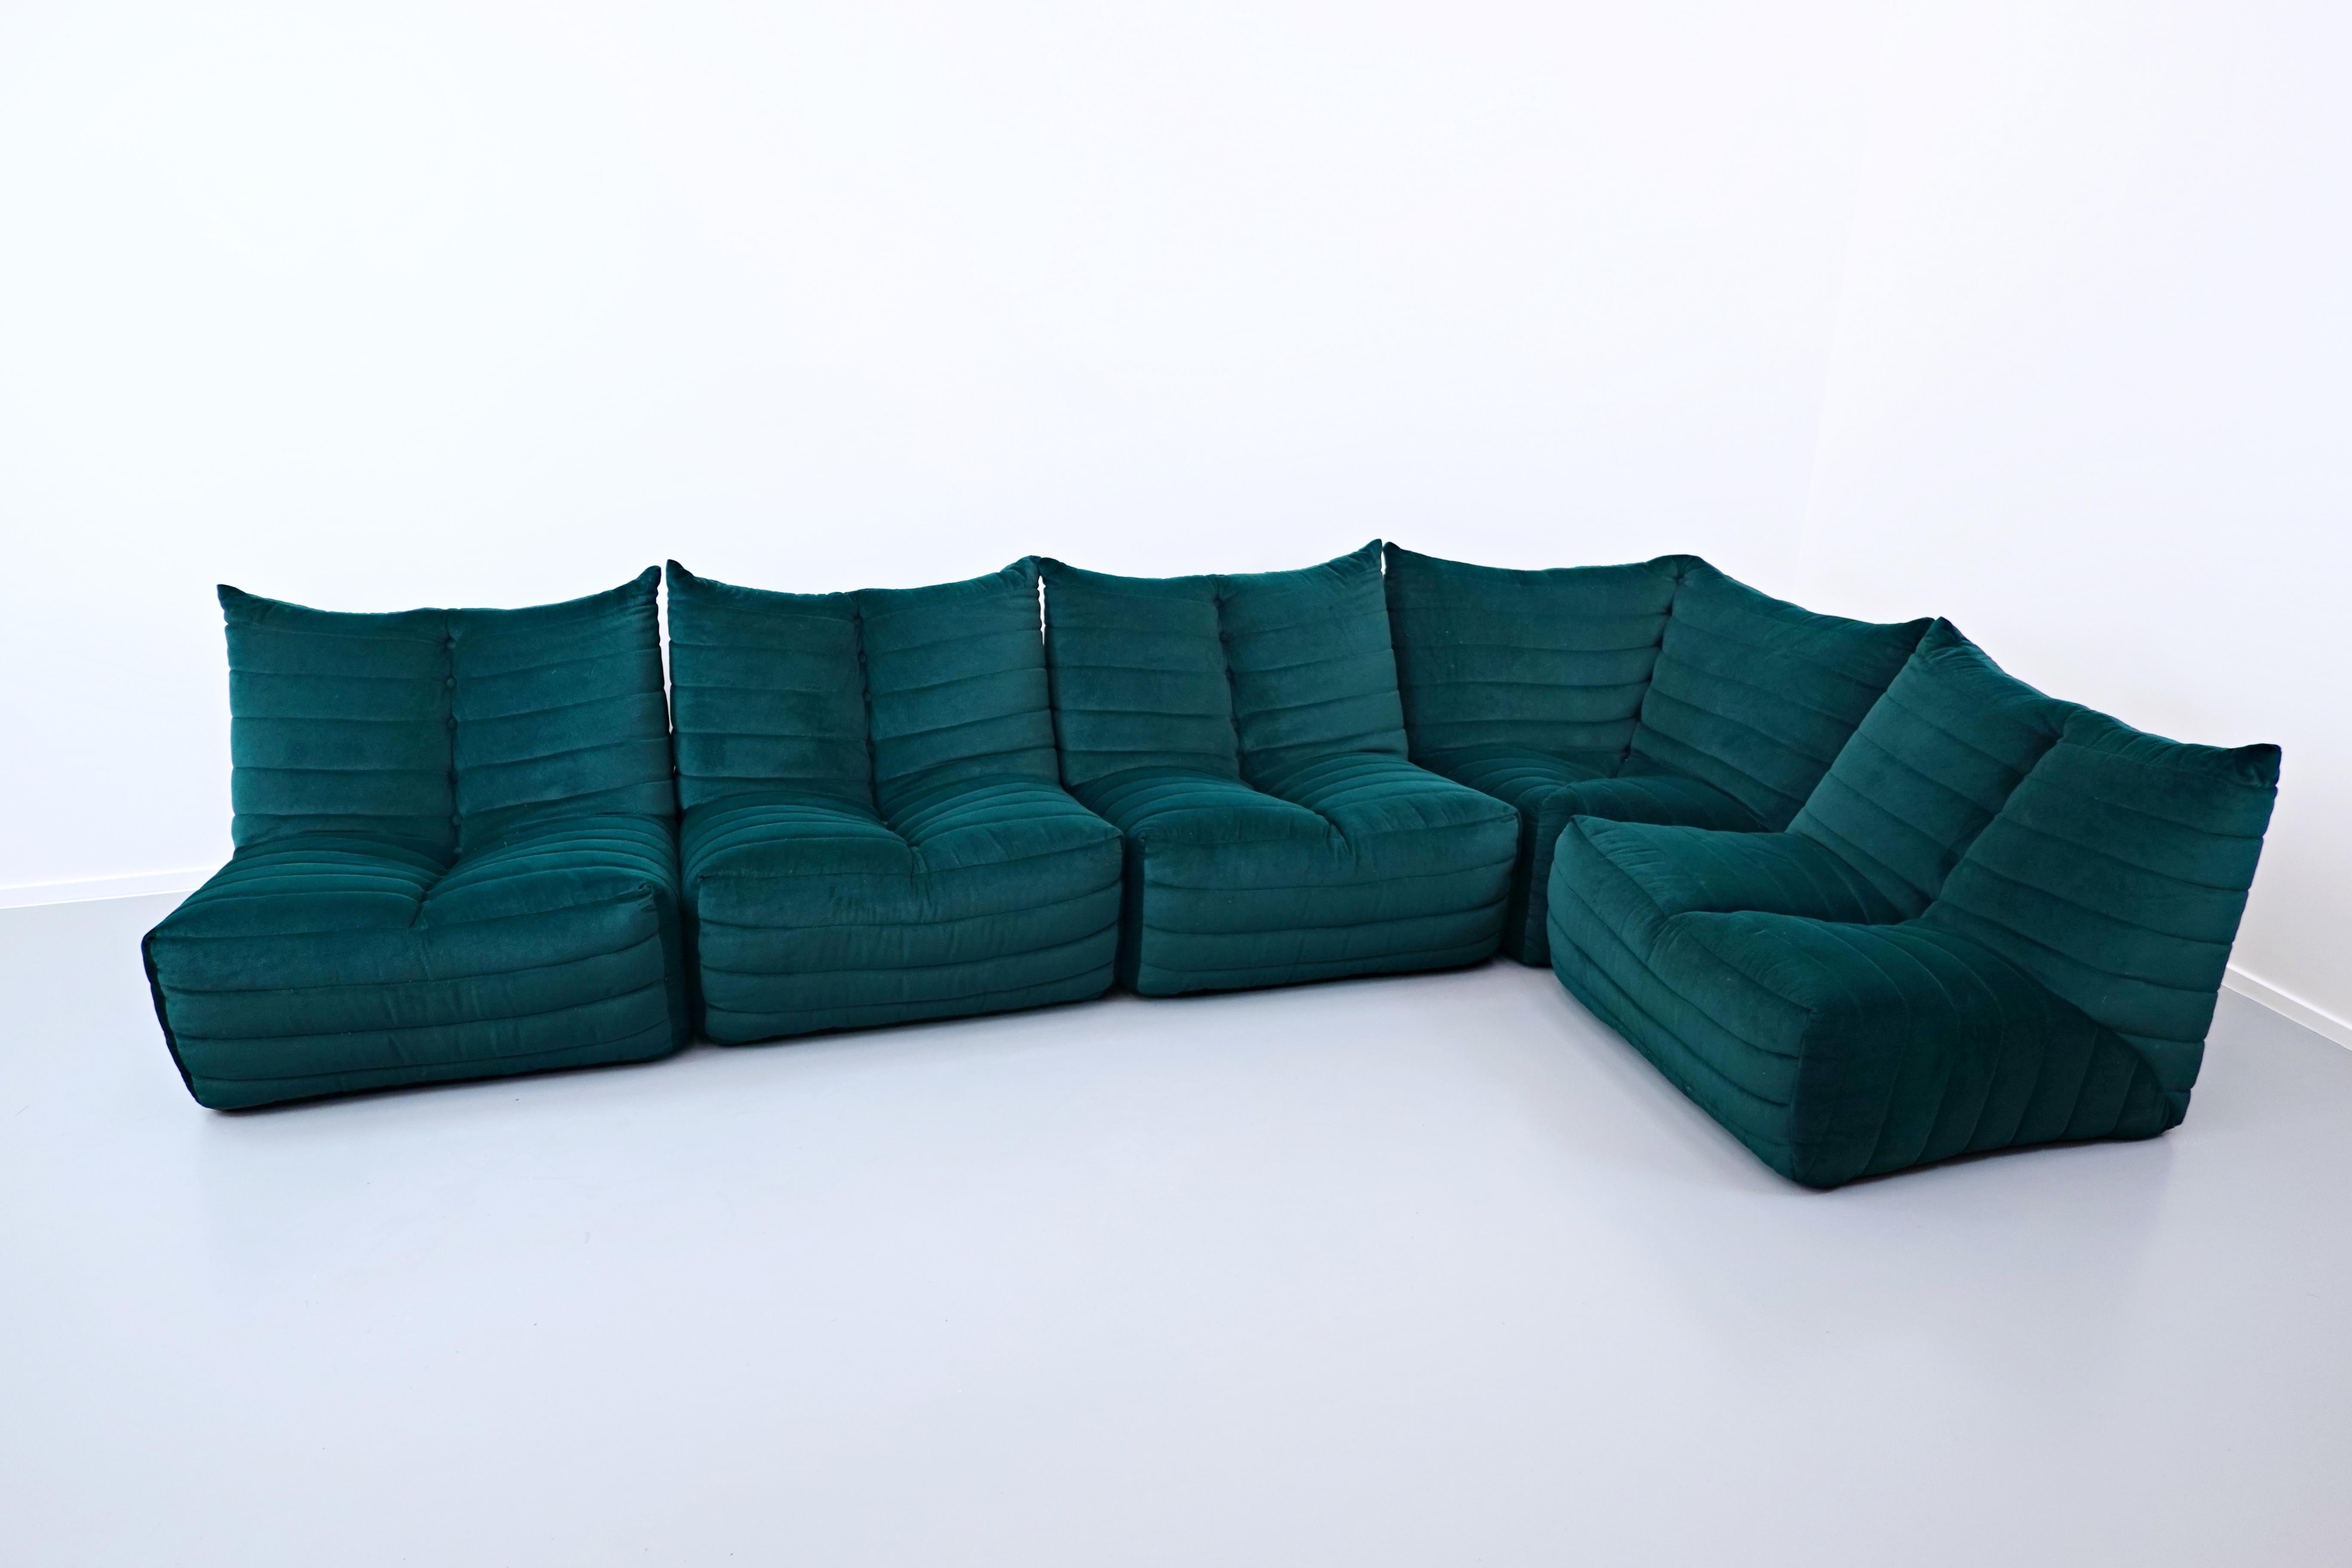 Sectional sofa Model Zozo by Seven Salotti, Italy, 1970s
4 elements left. No corner 
Price is per element.